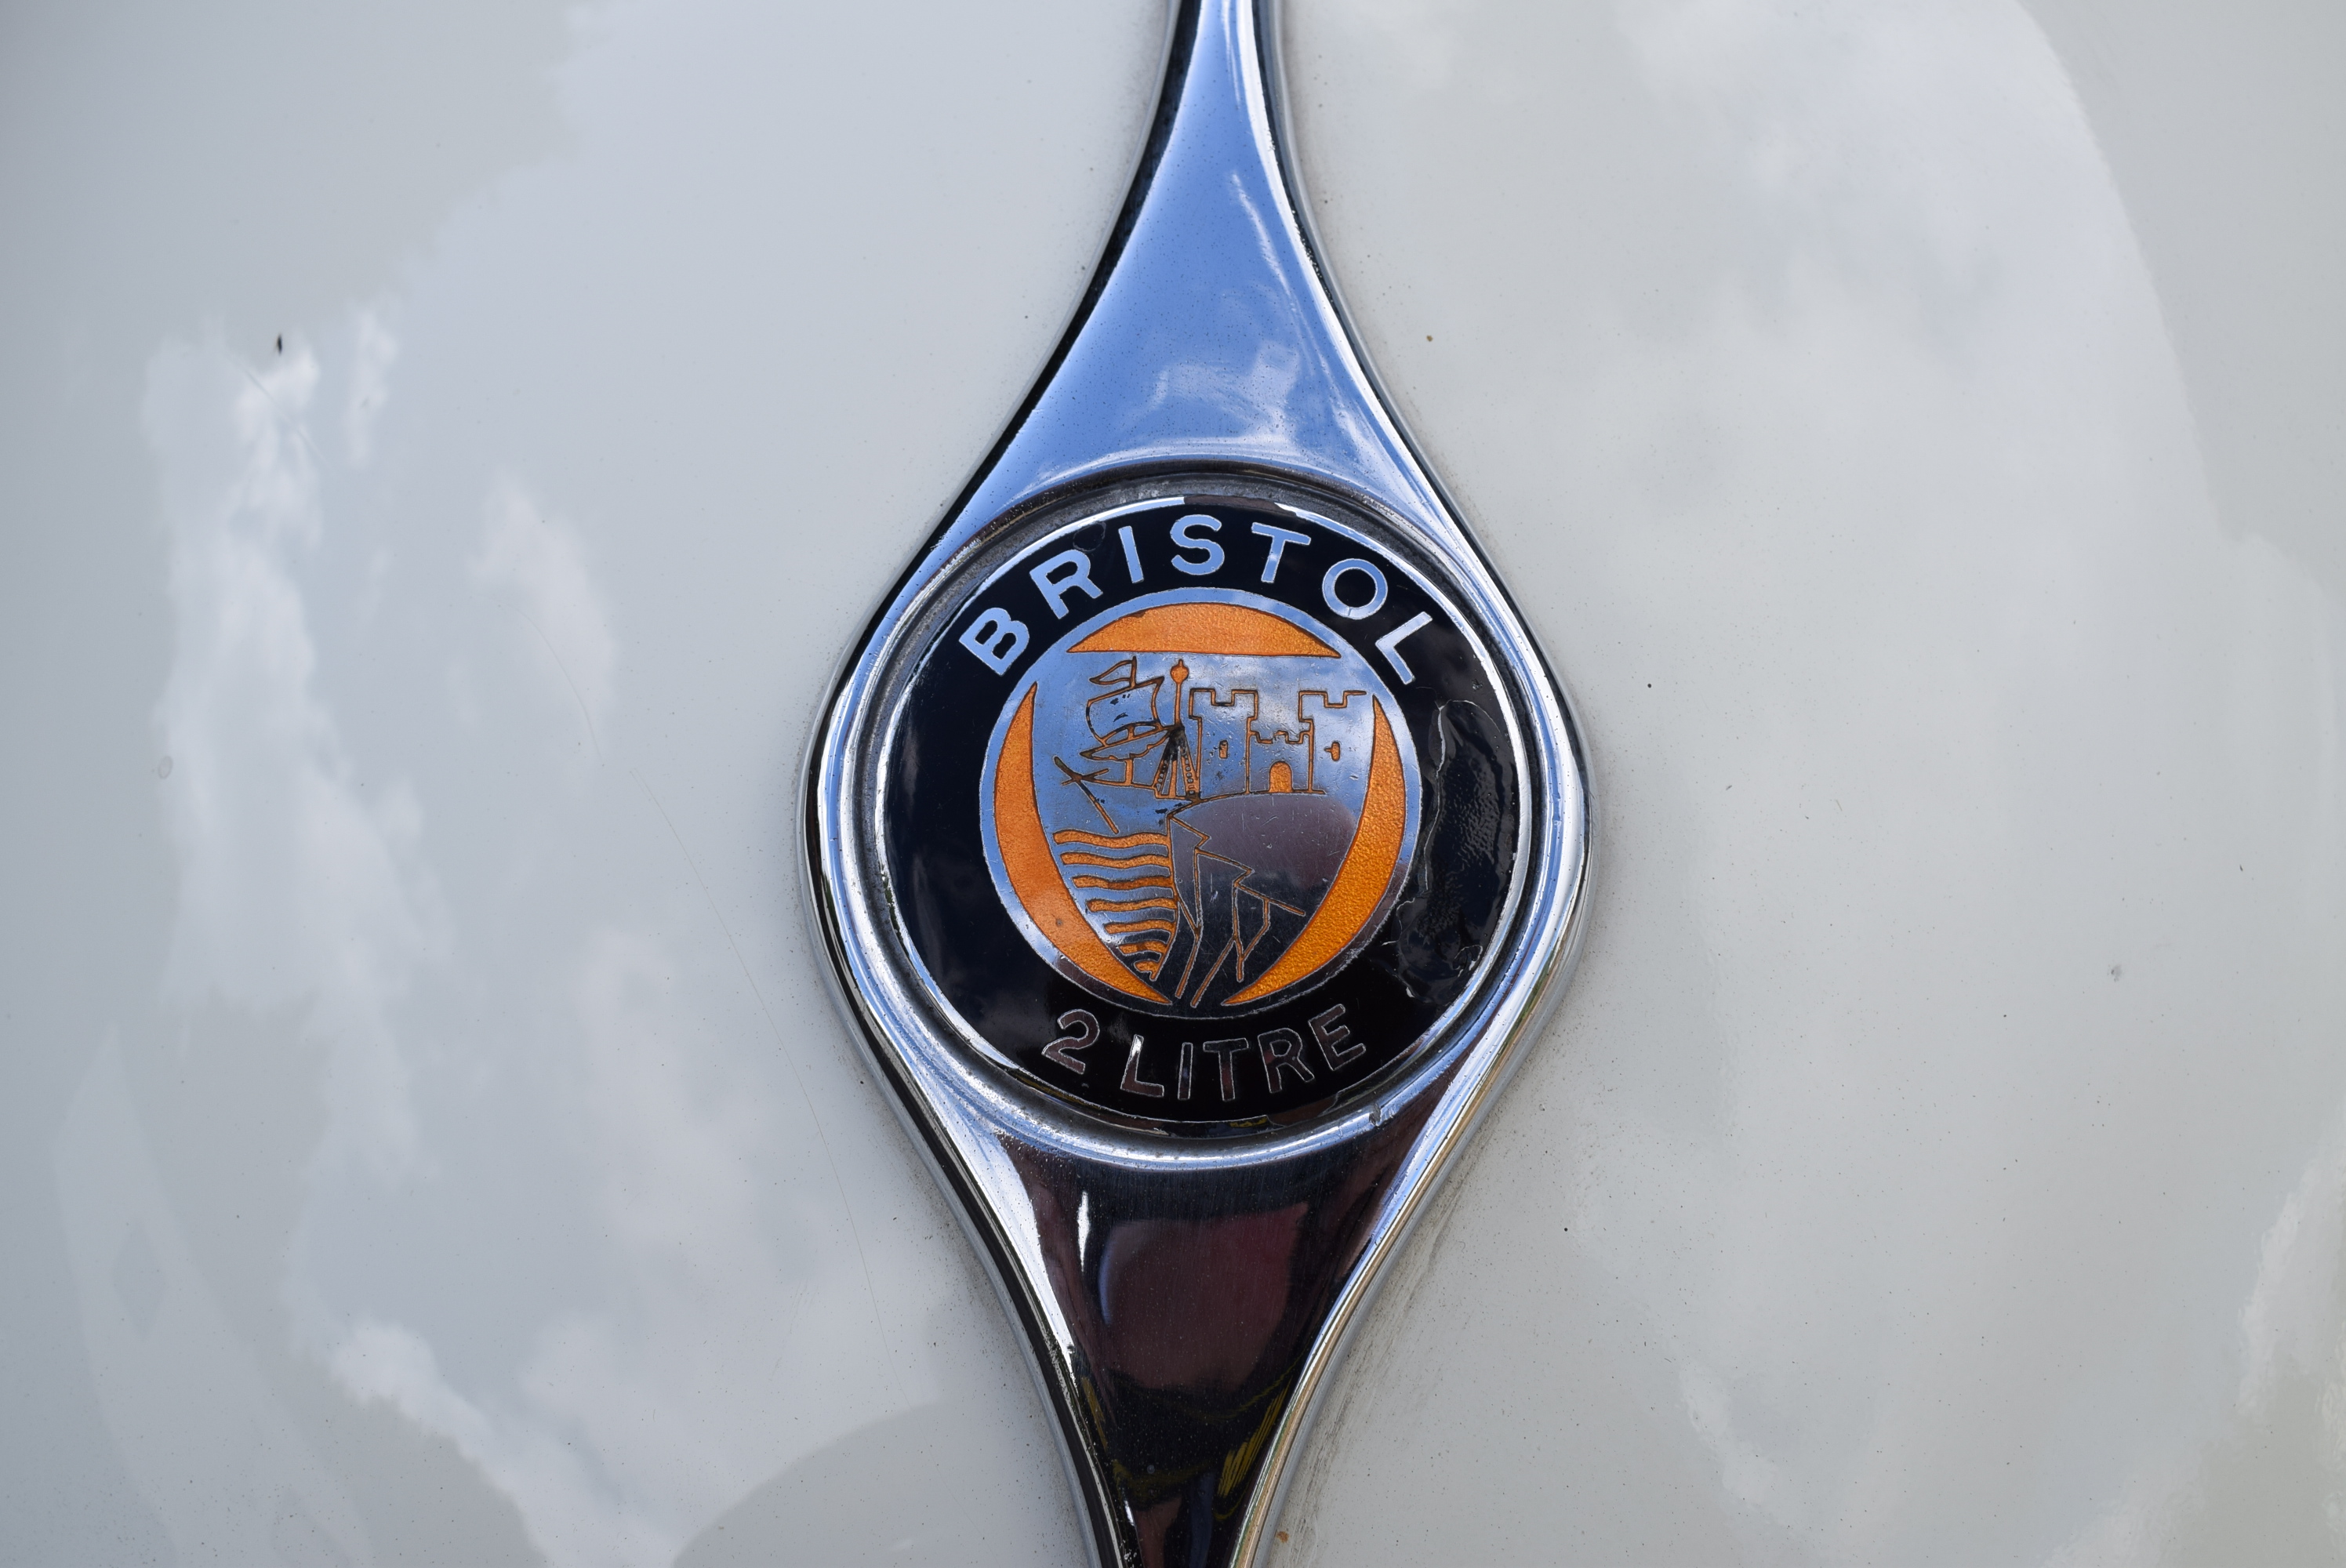 Bristol 400